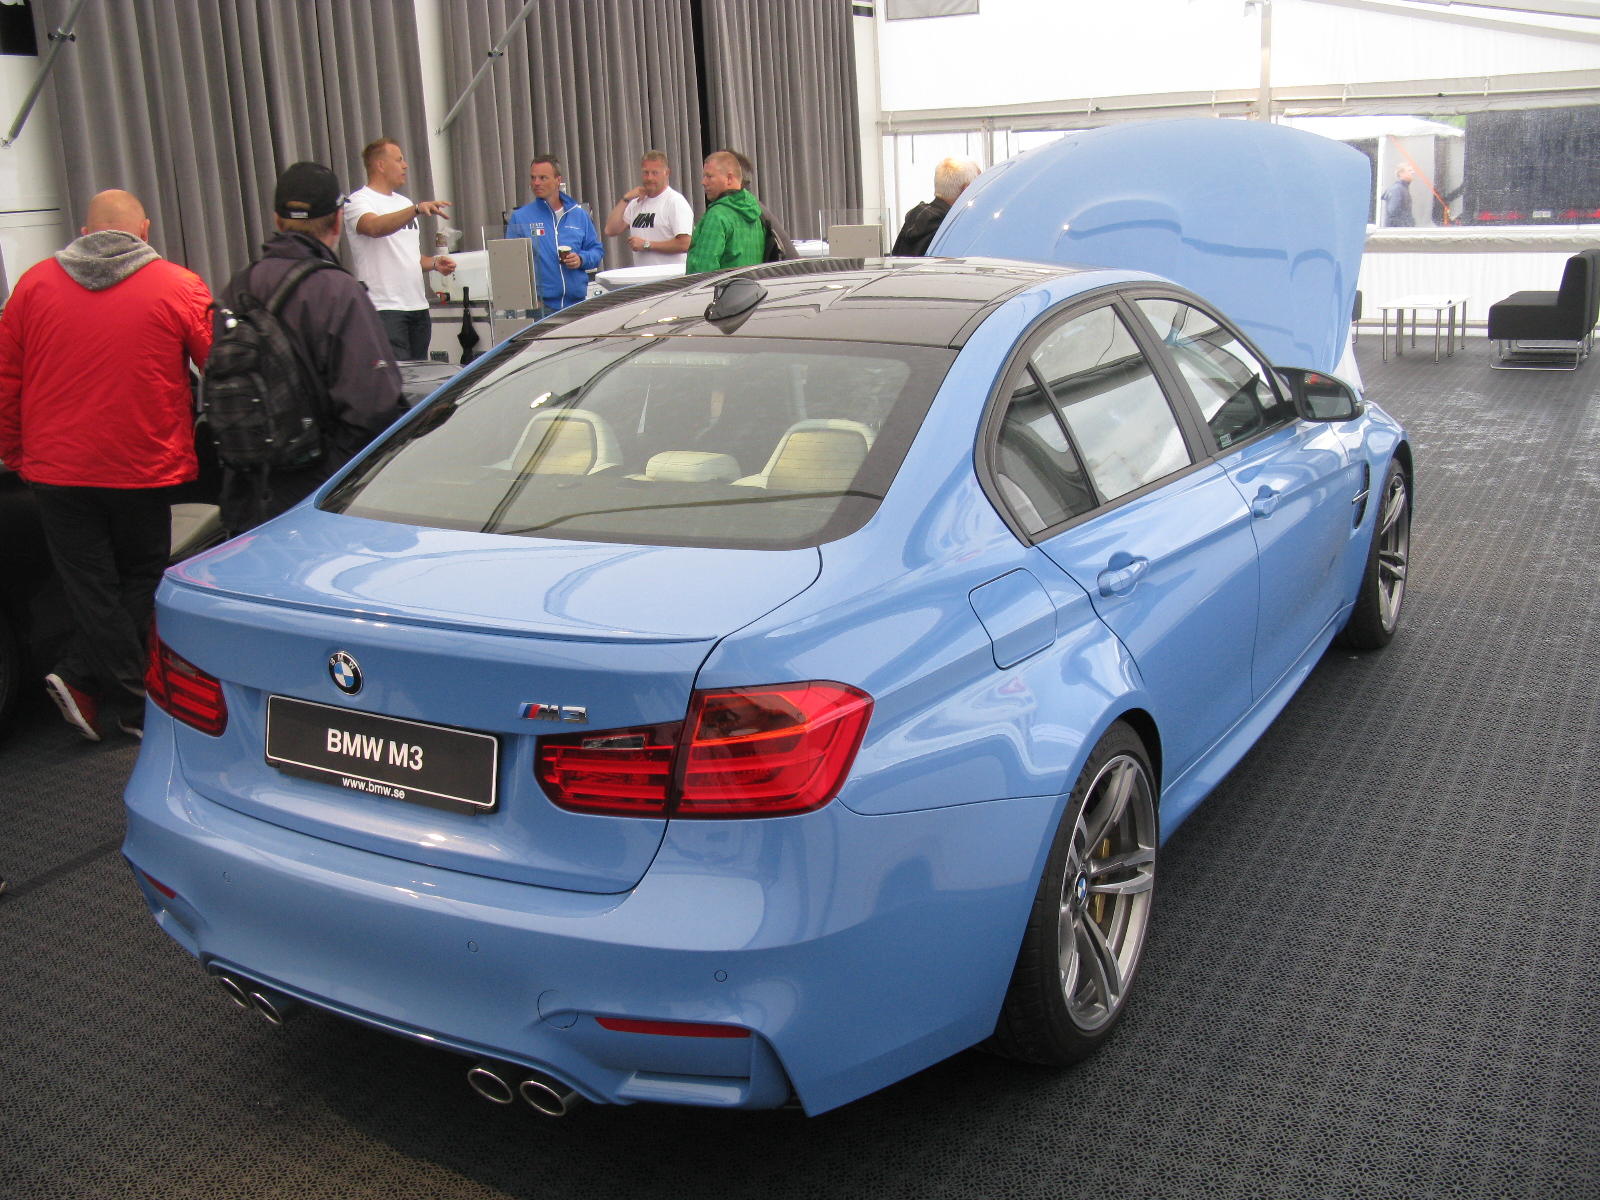 BMW M3 - Wikidata